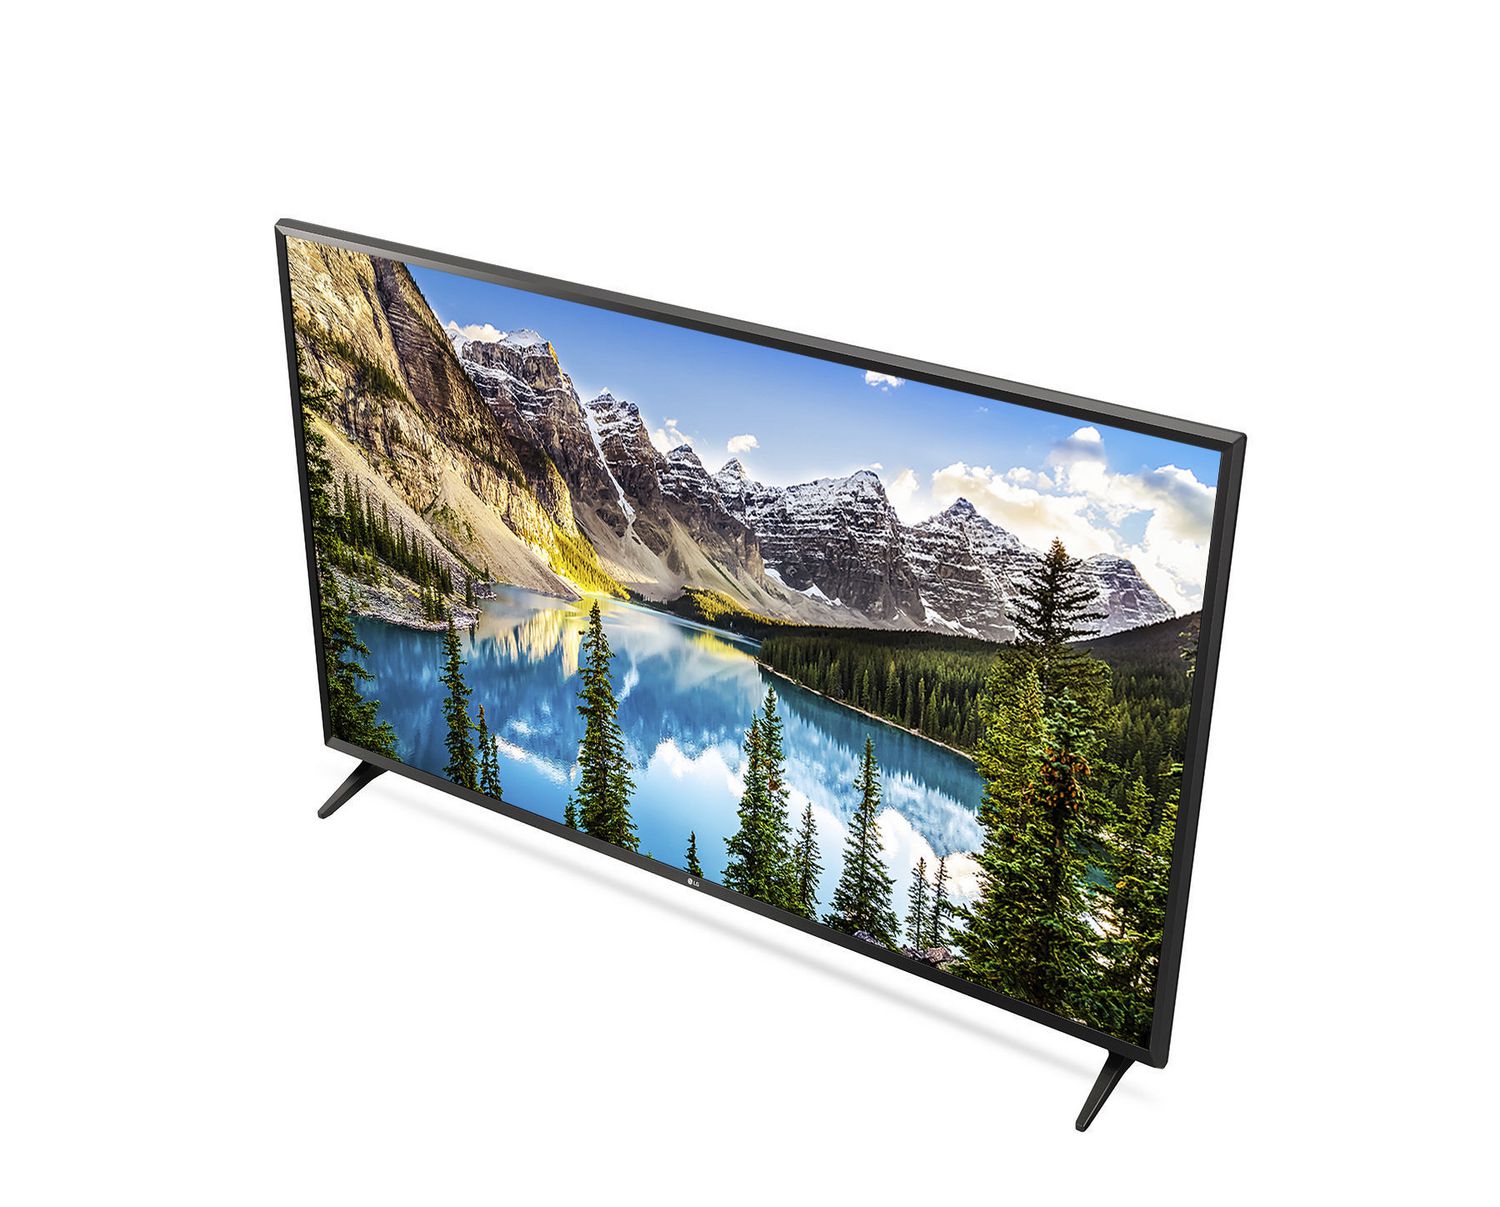 LG 49UJ6300 4K UHD Smart LED TV with WebOS 3.5 - Walmart.ca